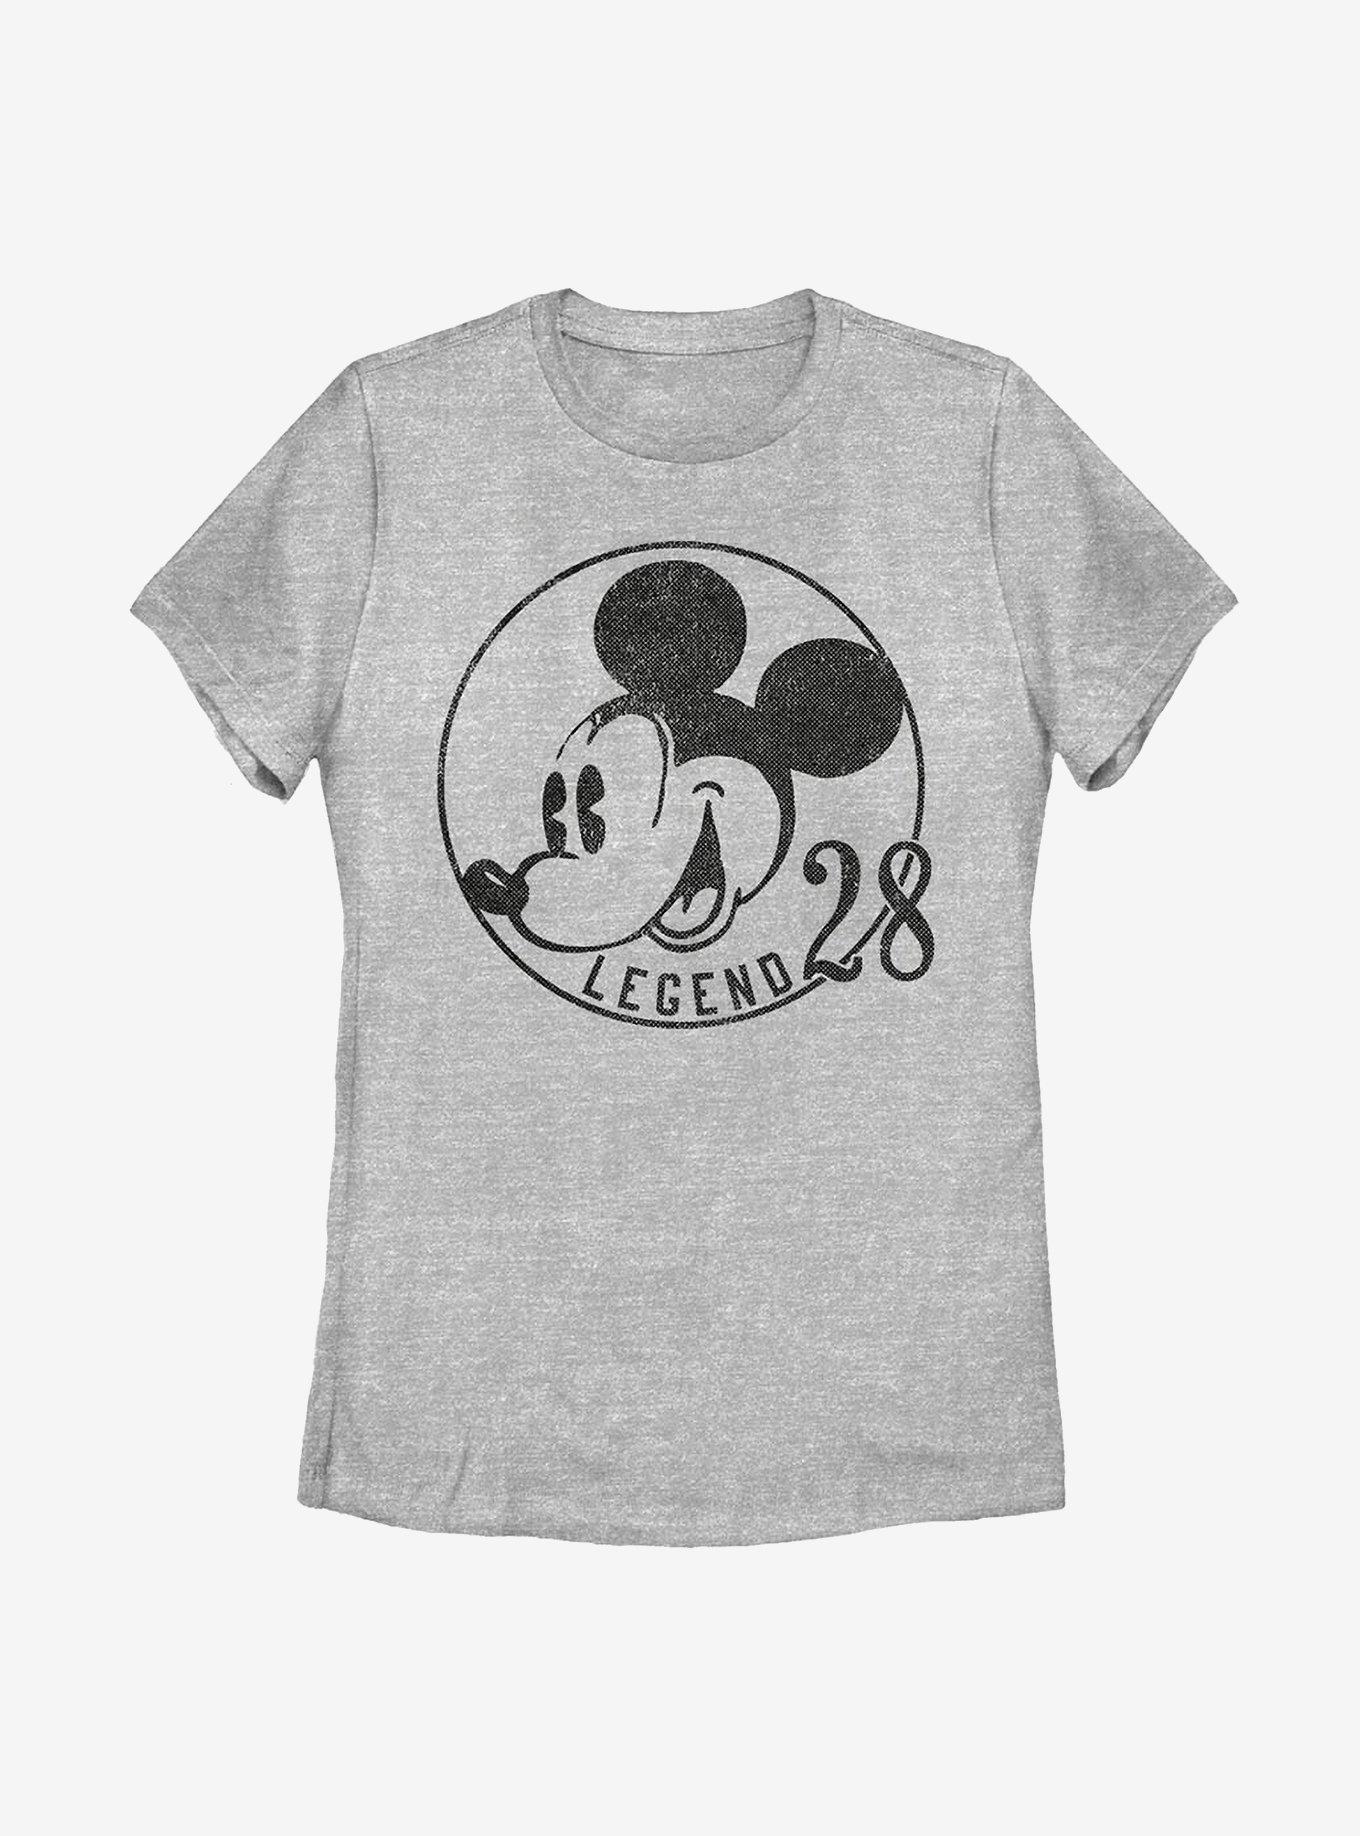 Disney Mickey Mouse 1928 Legend Womens T-Shirt, ATH HTR, hi-res